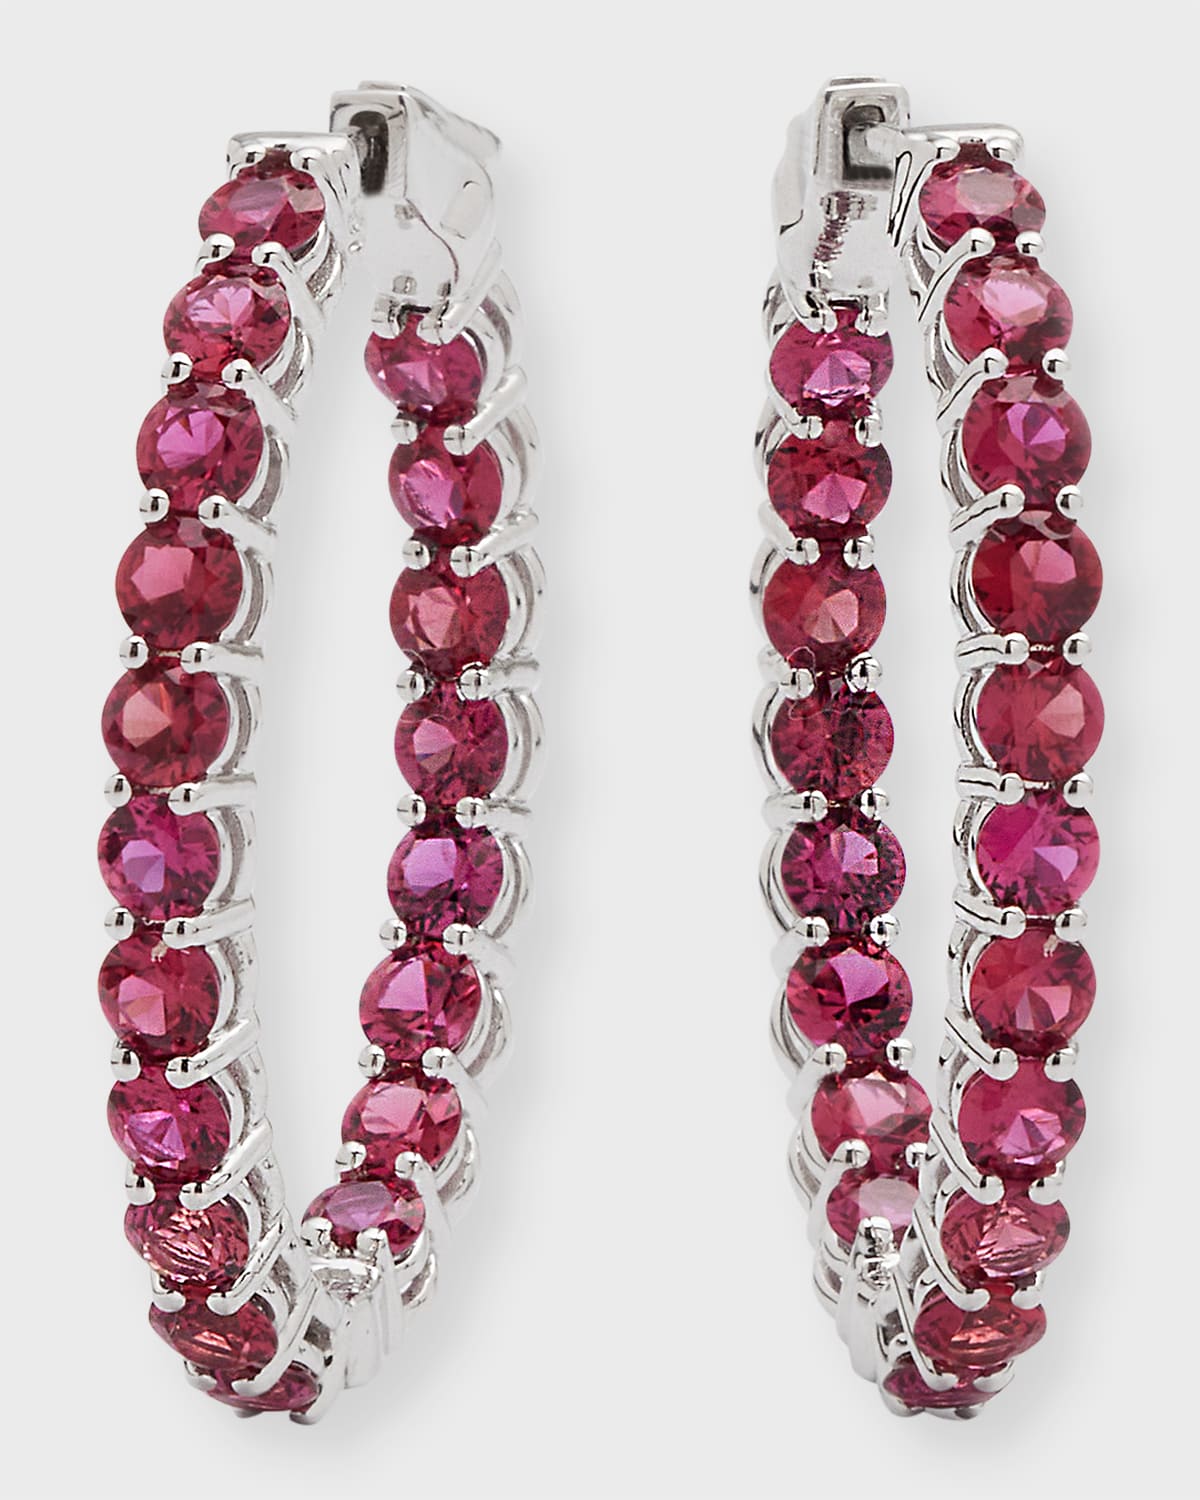 NM Diamond Collection Large Ruby Hoop Earrings